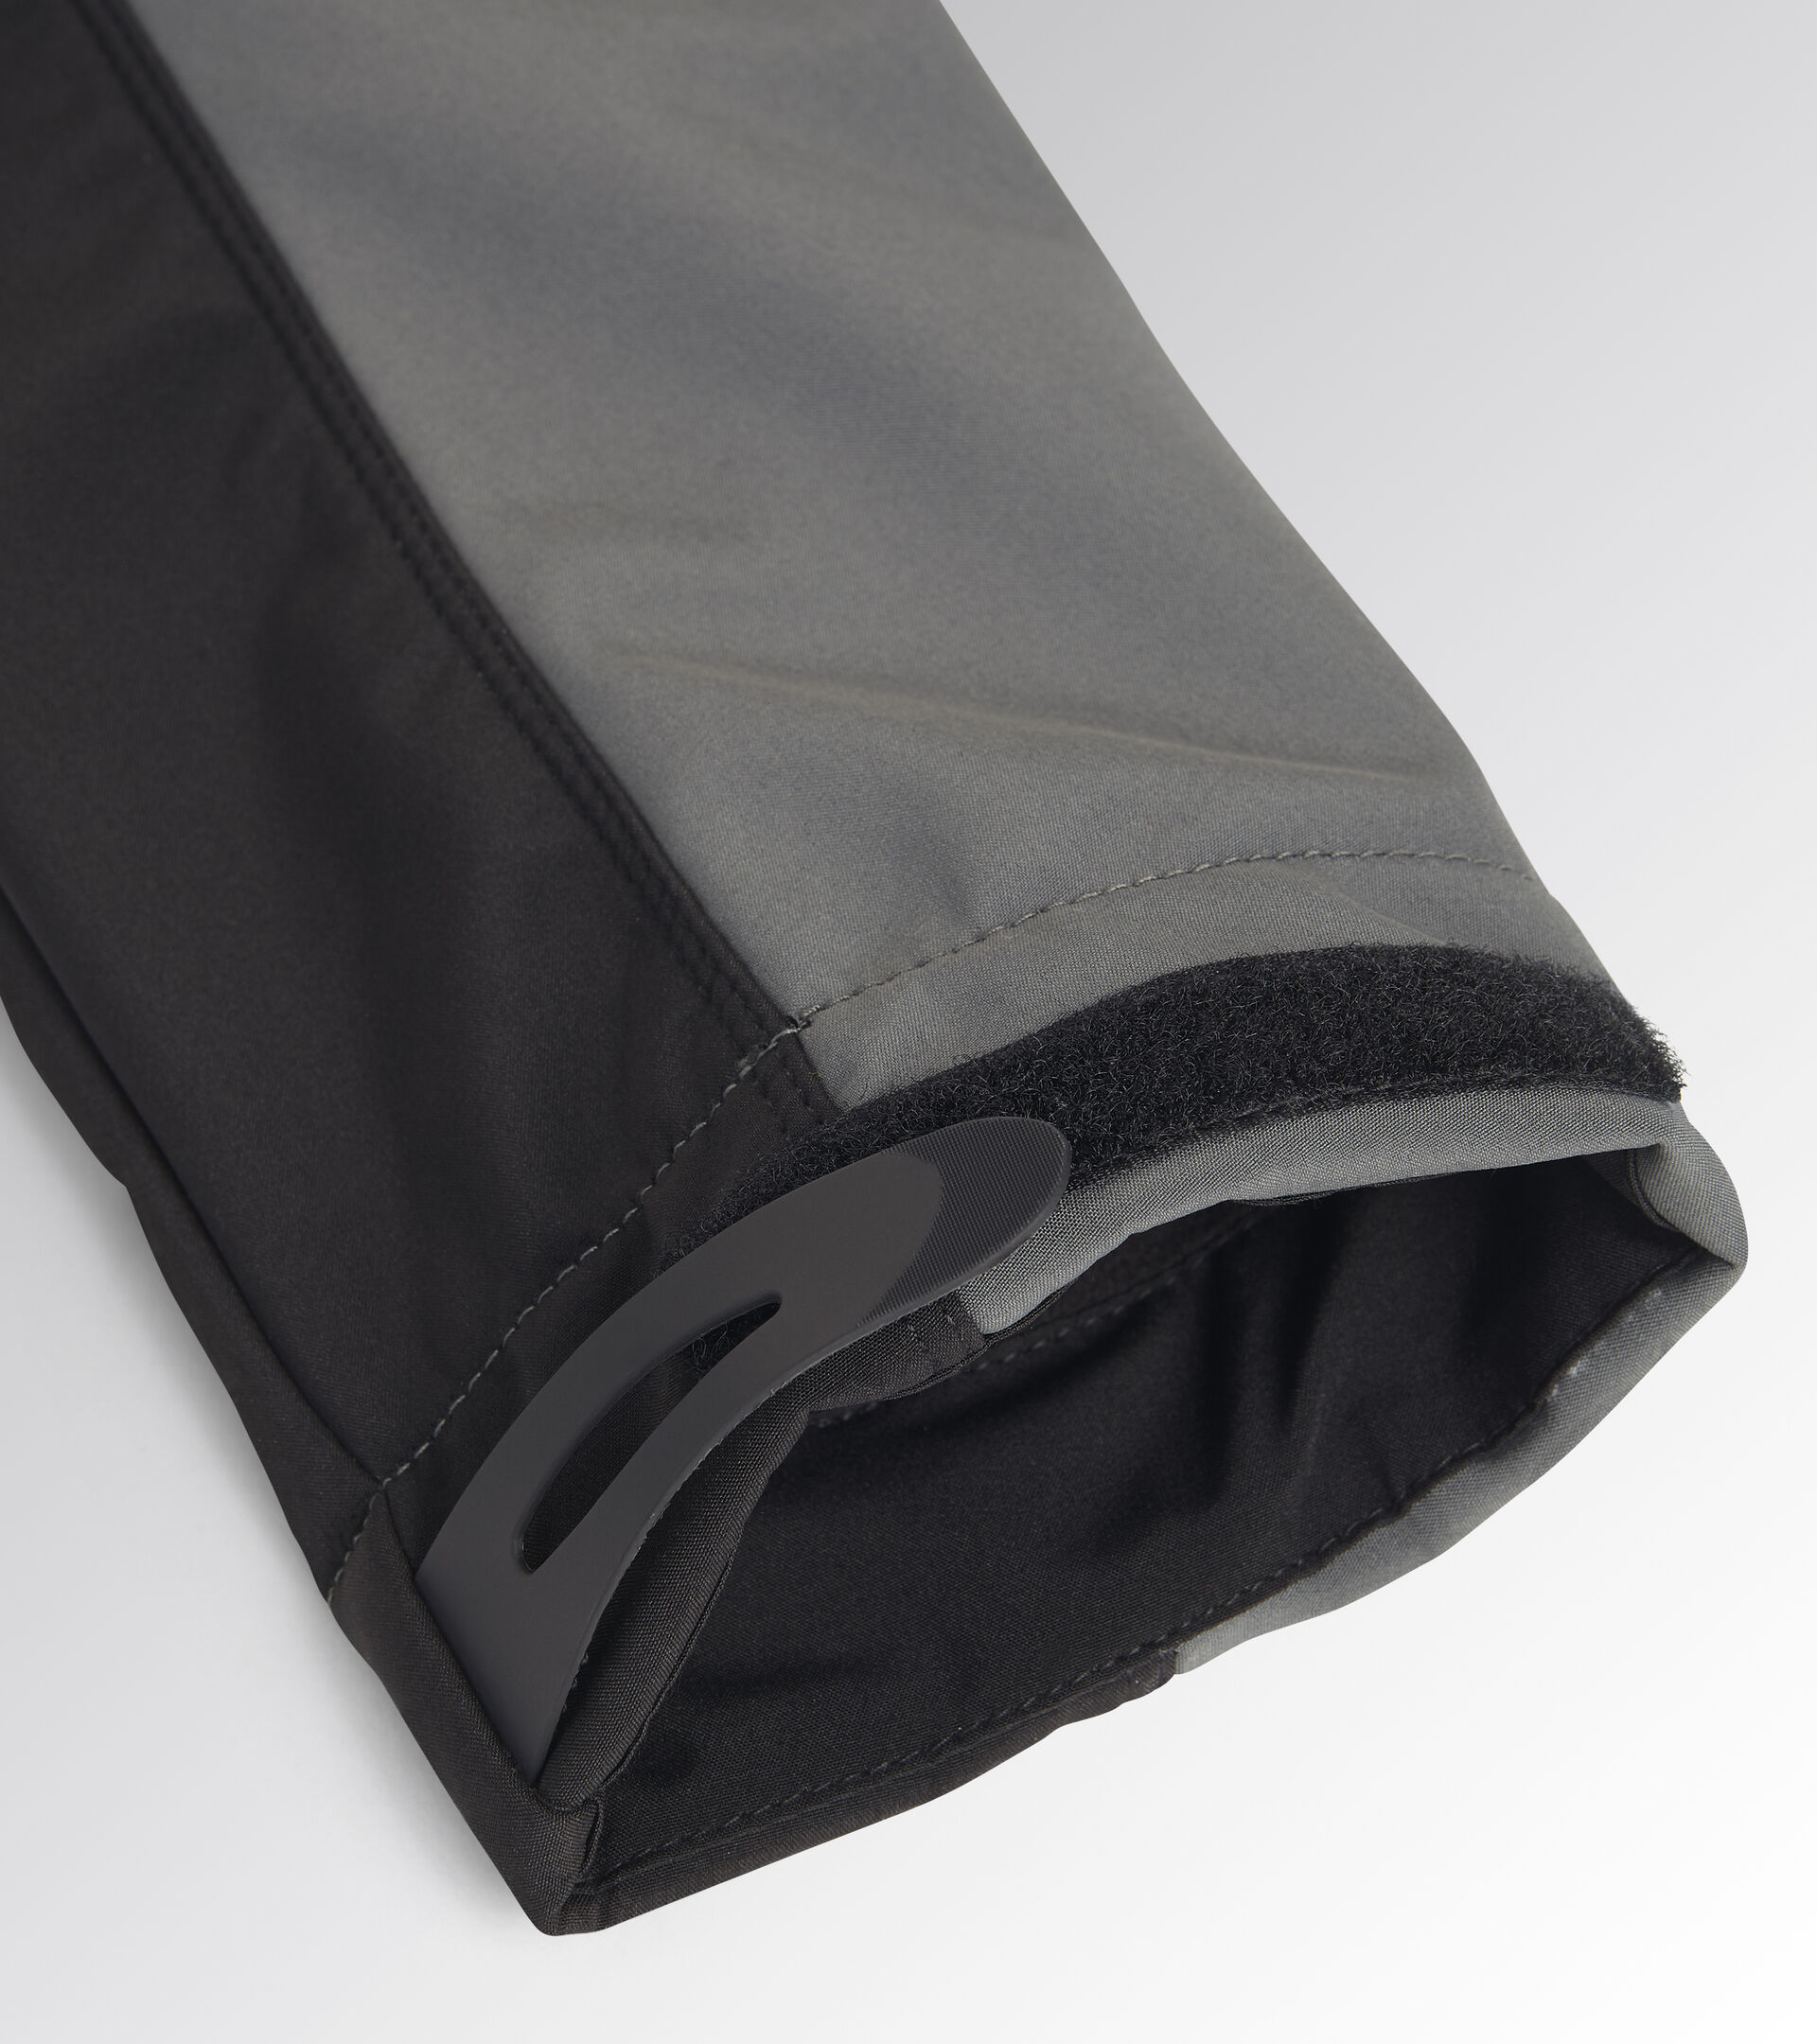 Work jacket SOFTSHELL CARBON TECH CLIMBING IVY - Utility